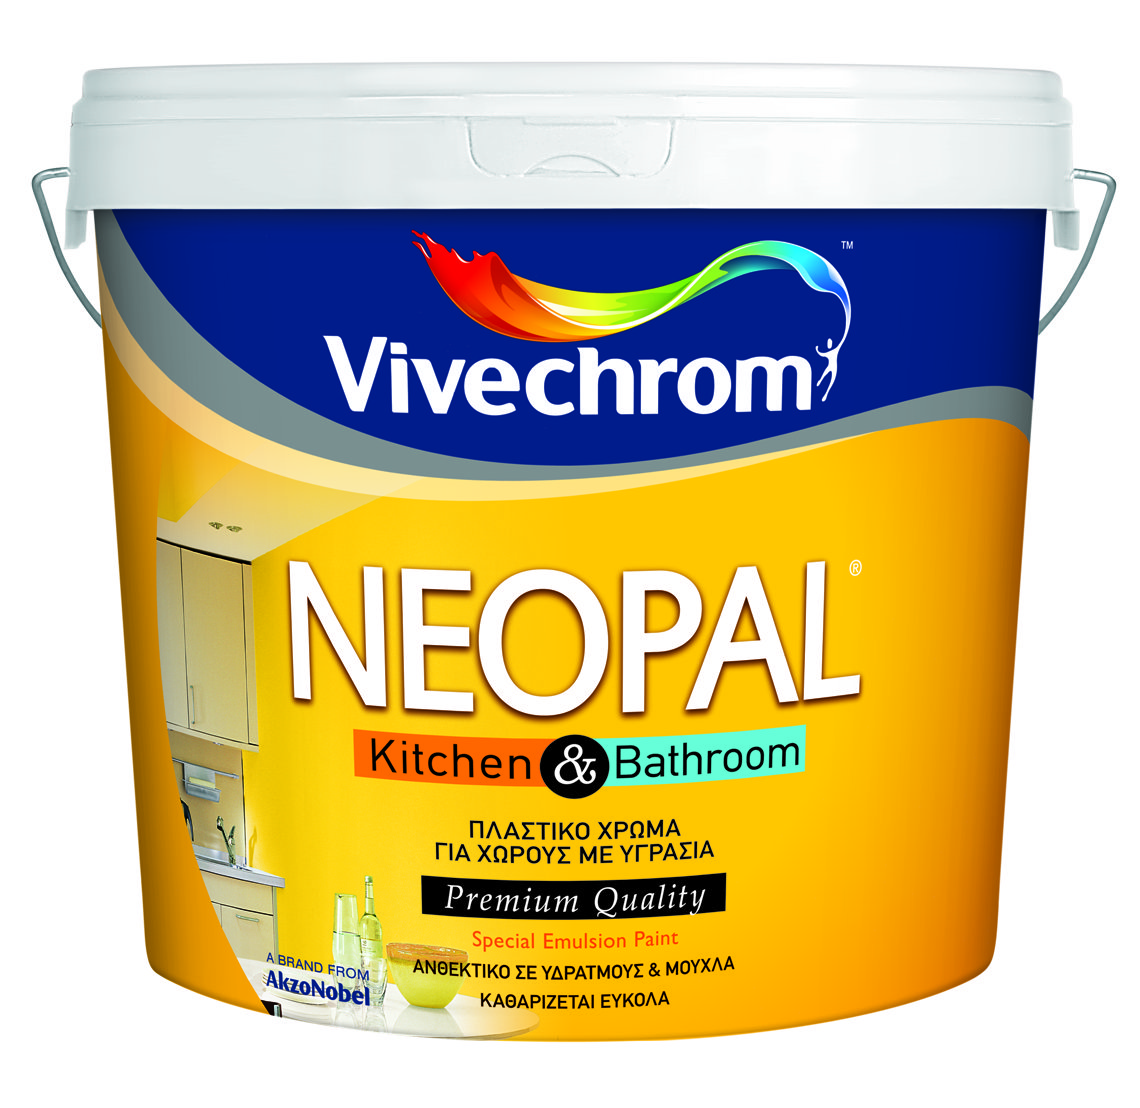 Vivechrom Neopal Kitchen & Bathroom Αντιμικροβιακό Χρώμα για Χώρους με Υγρασία Βάση P 10L